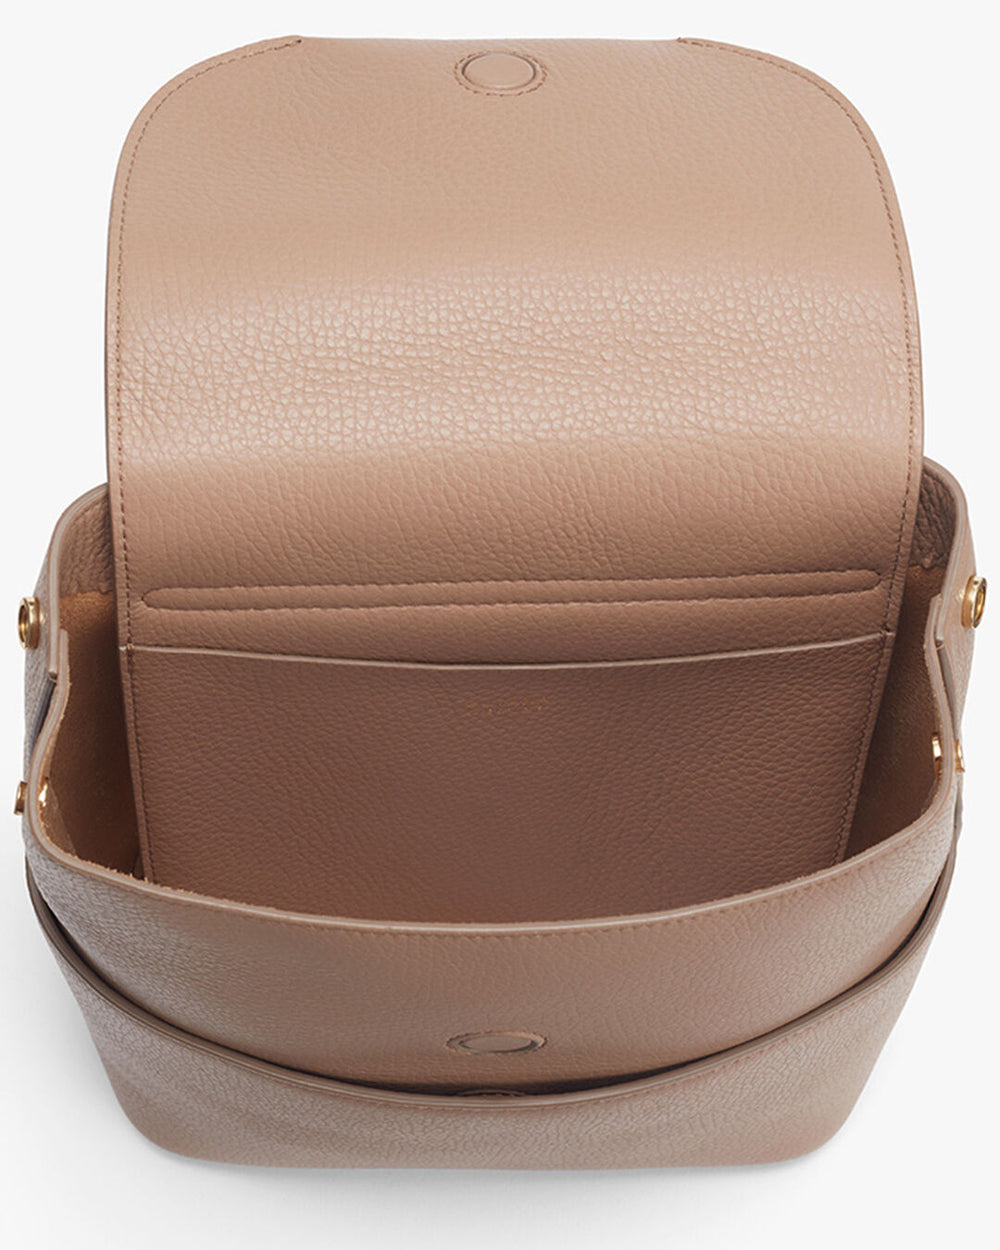 Textured shoulder bag with flap closure and adjustable strap.